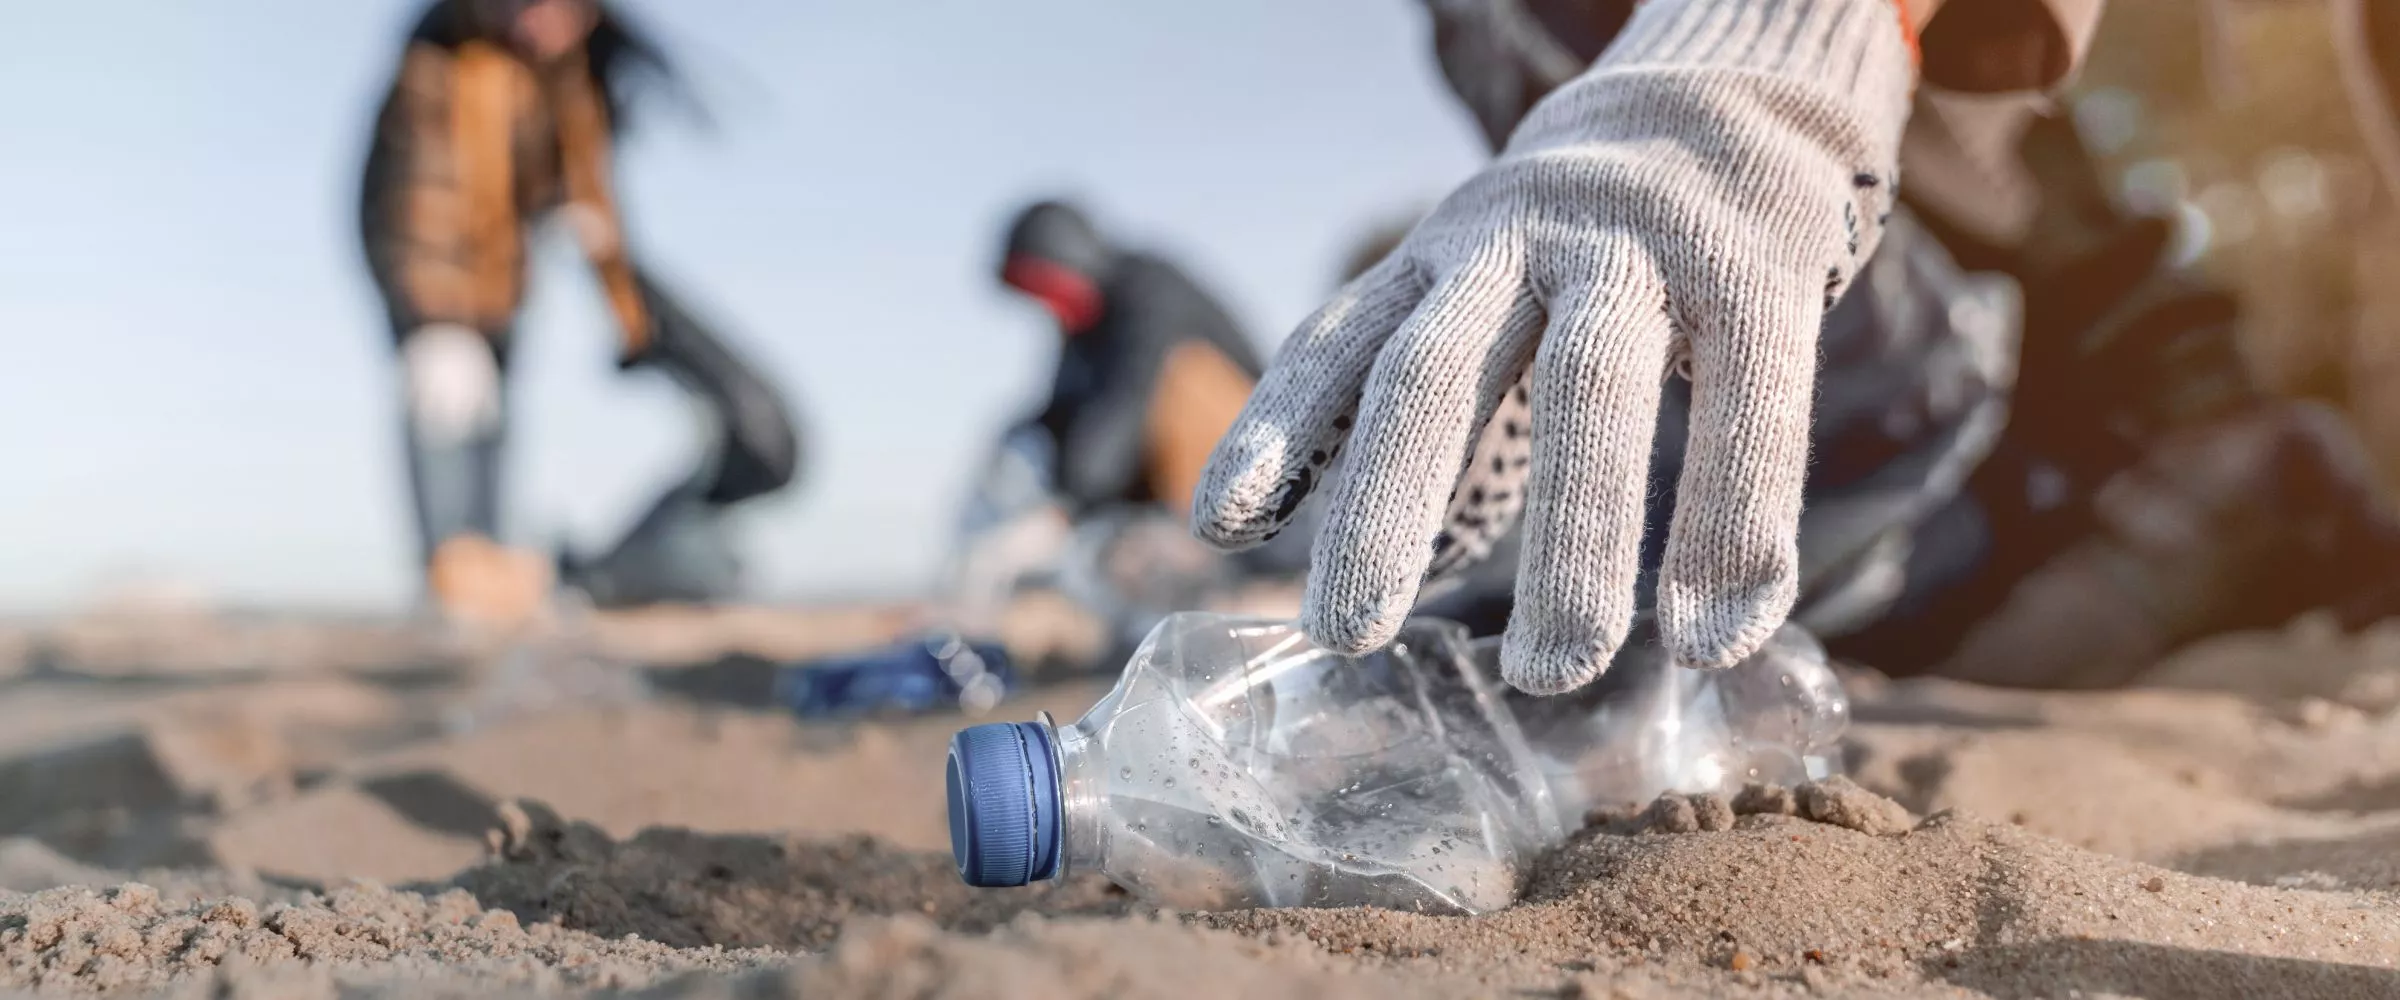 man picking scrap plastic bottles on beach